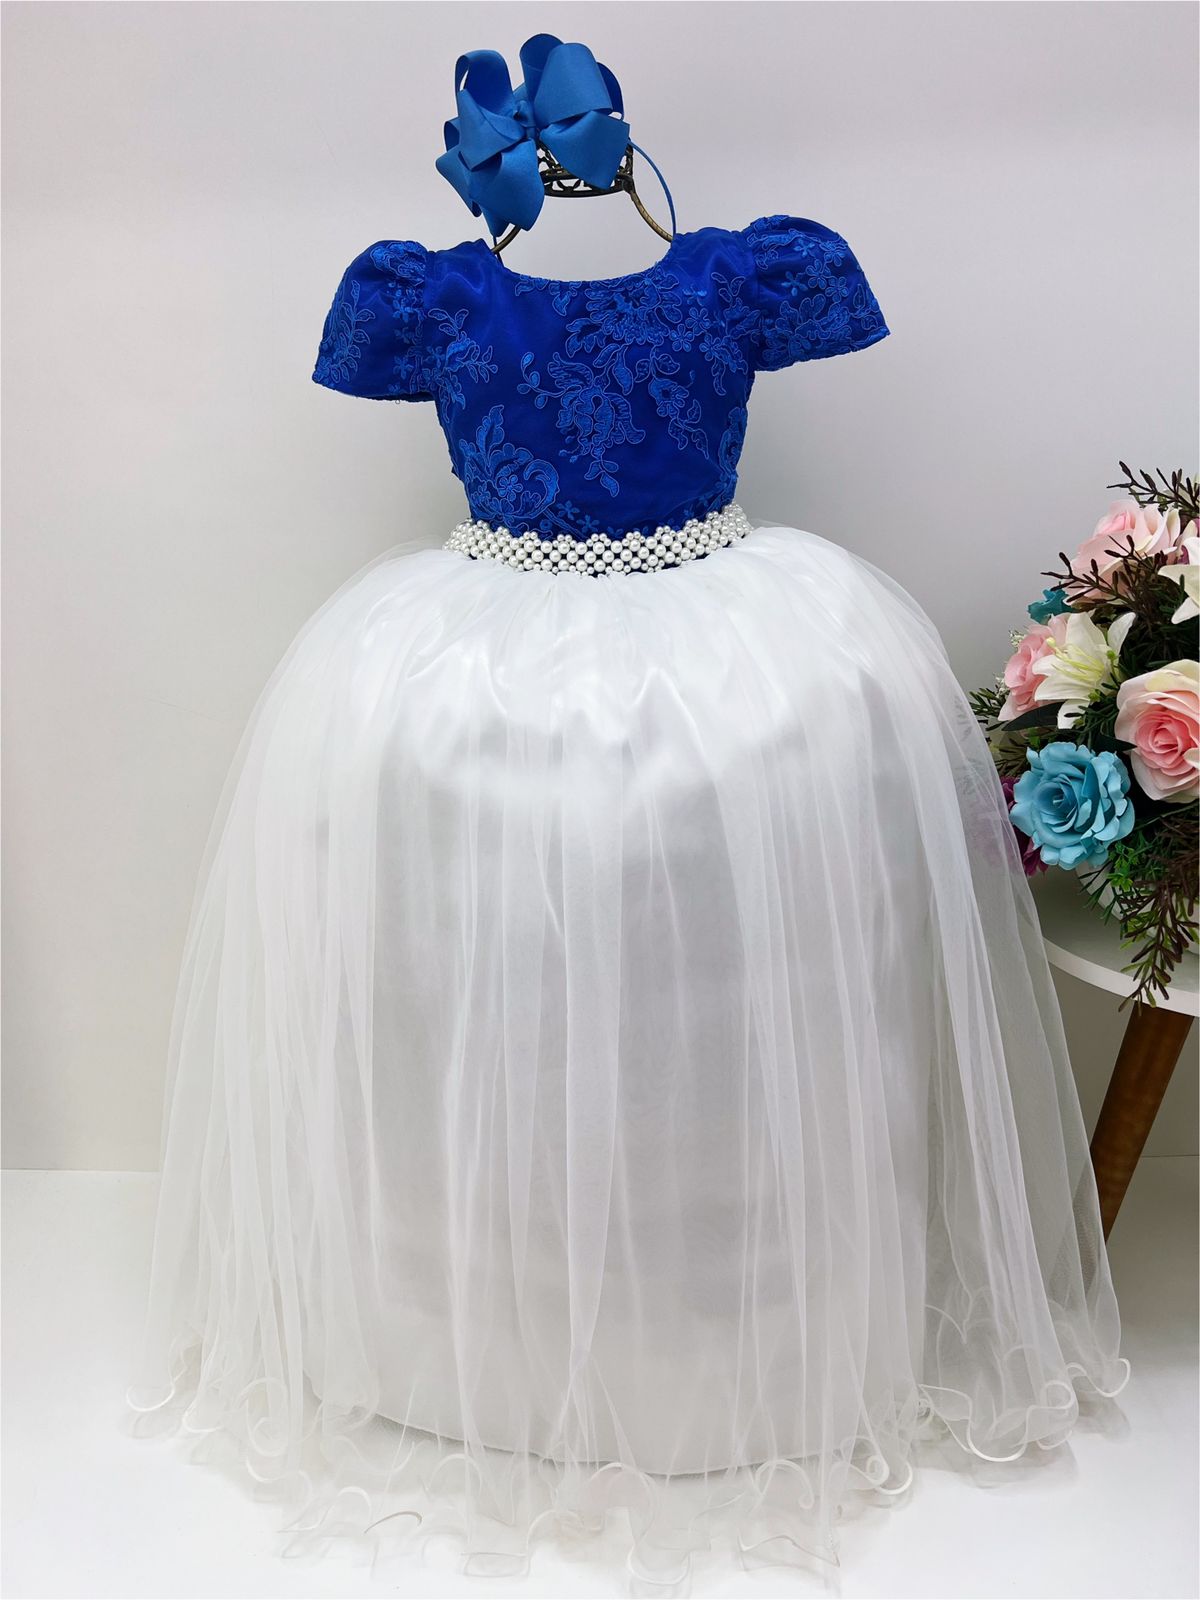 Vestido Infantil Azul Royal e OFF Damas Honra e Casamento